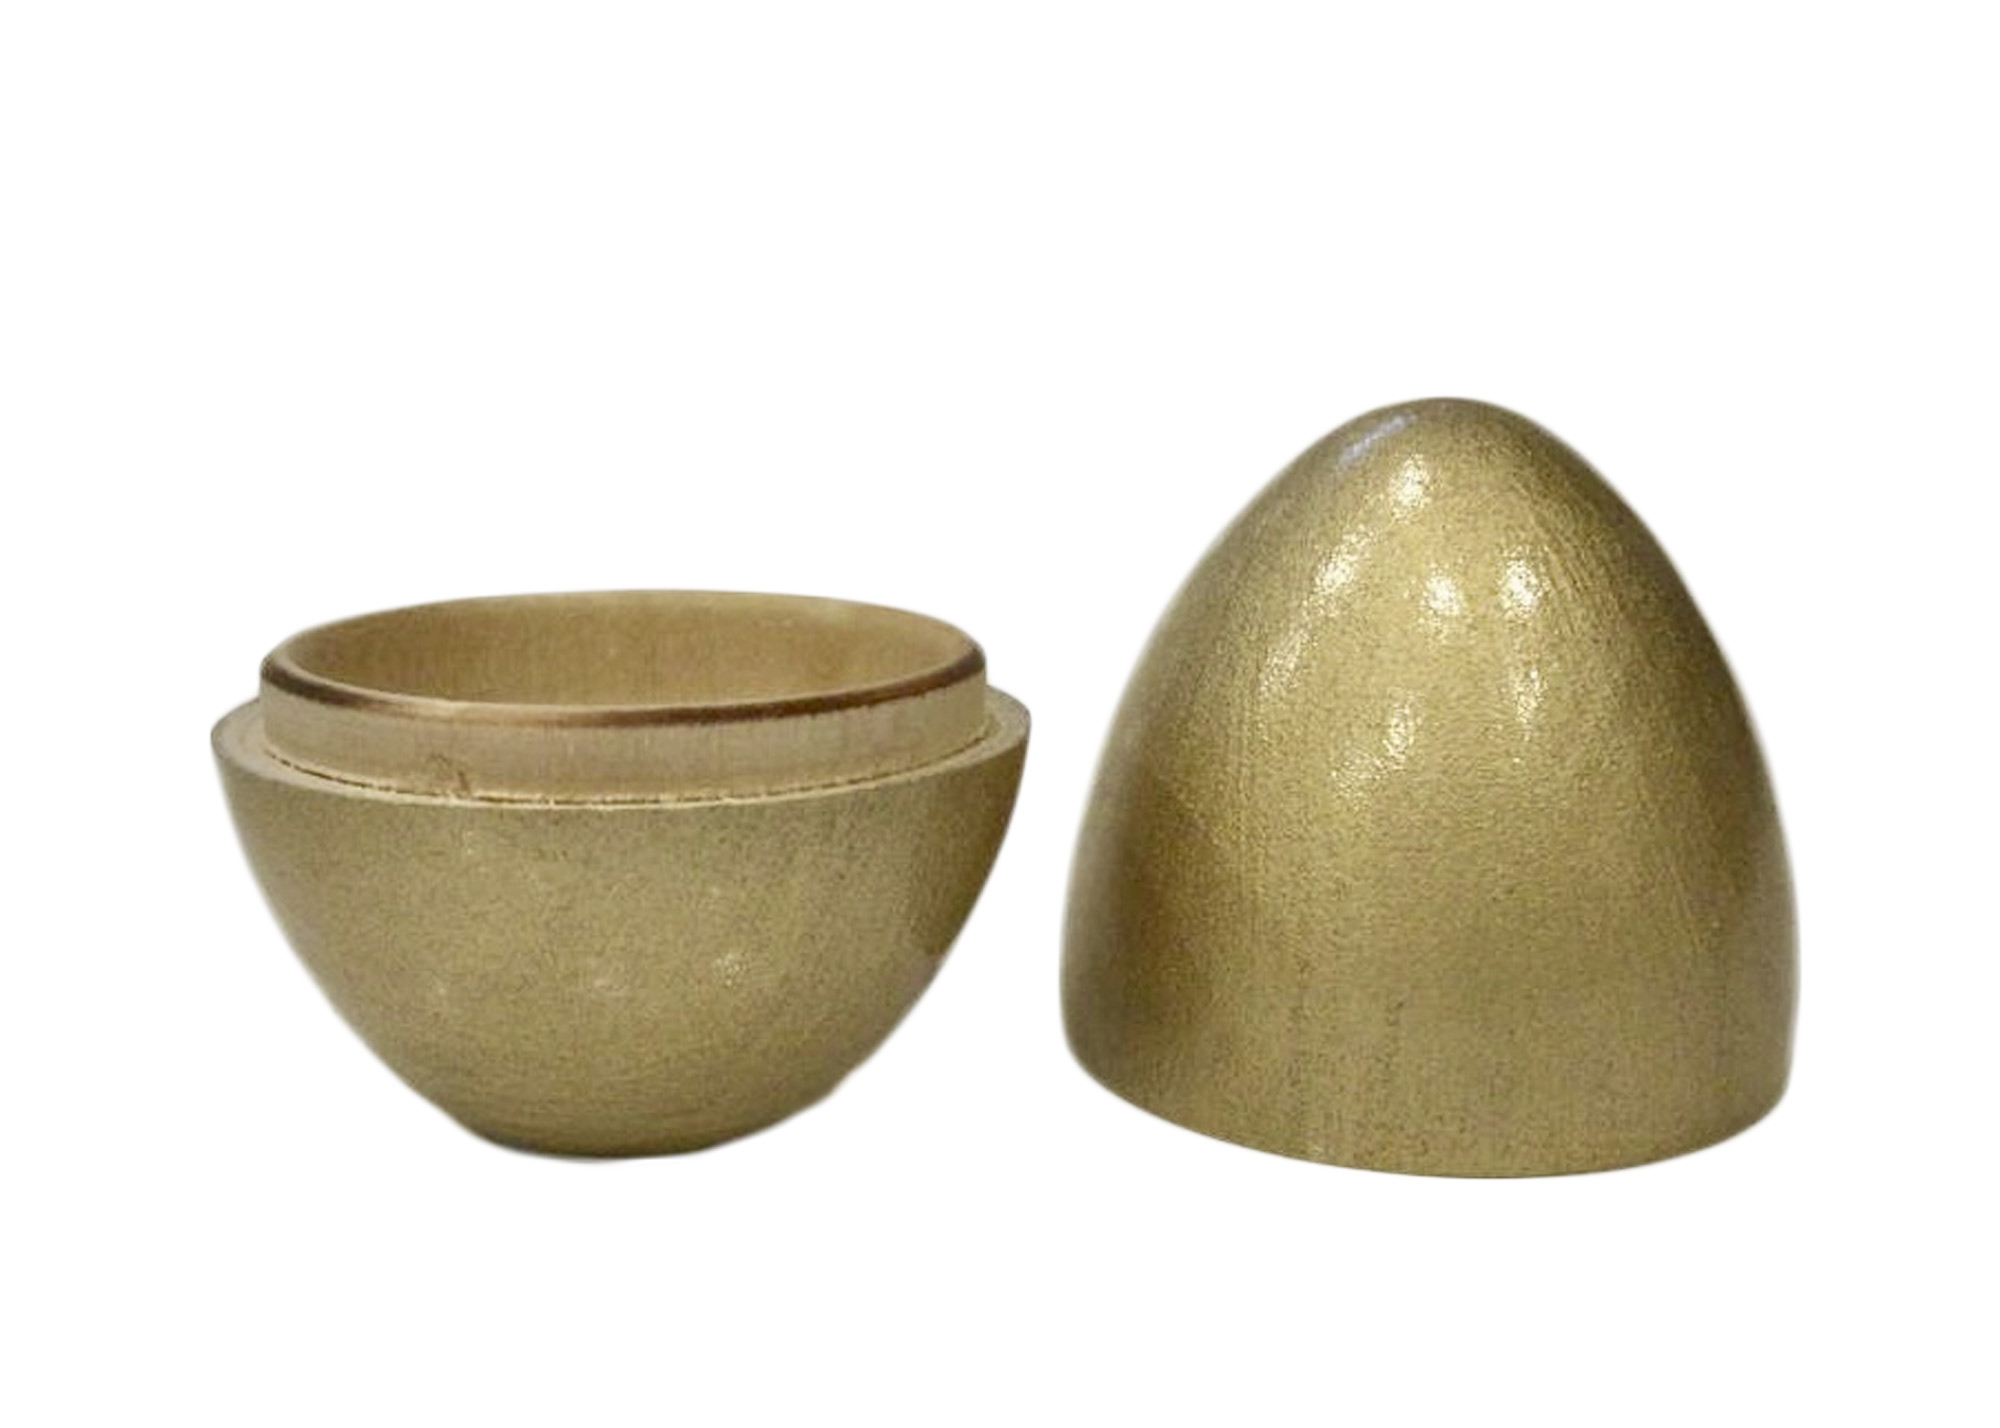 Buy Golden Goose Hollow Wooden Gold Egg 3.5" at GoldenCockerel.com